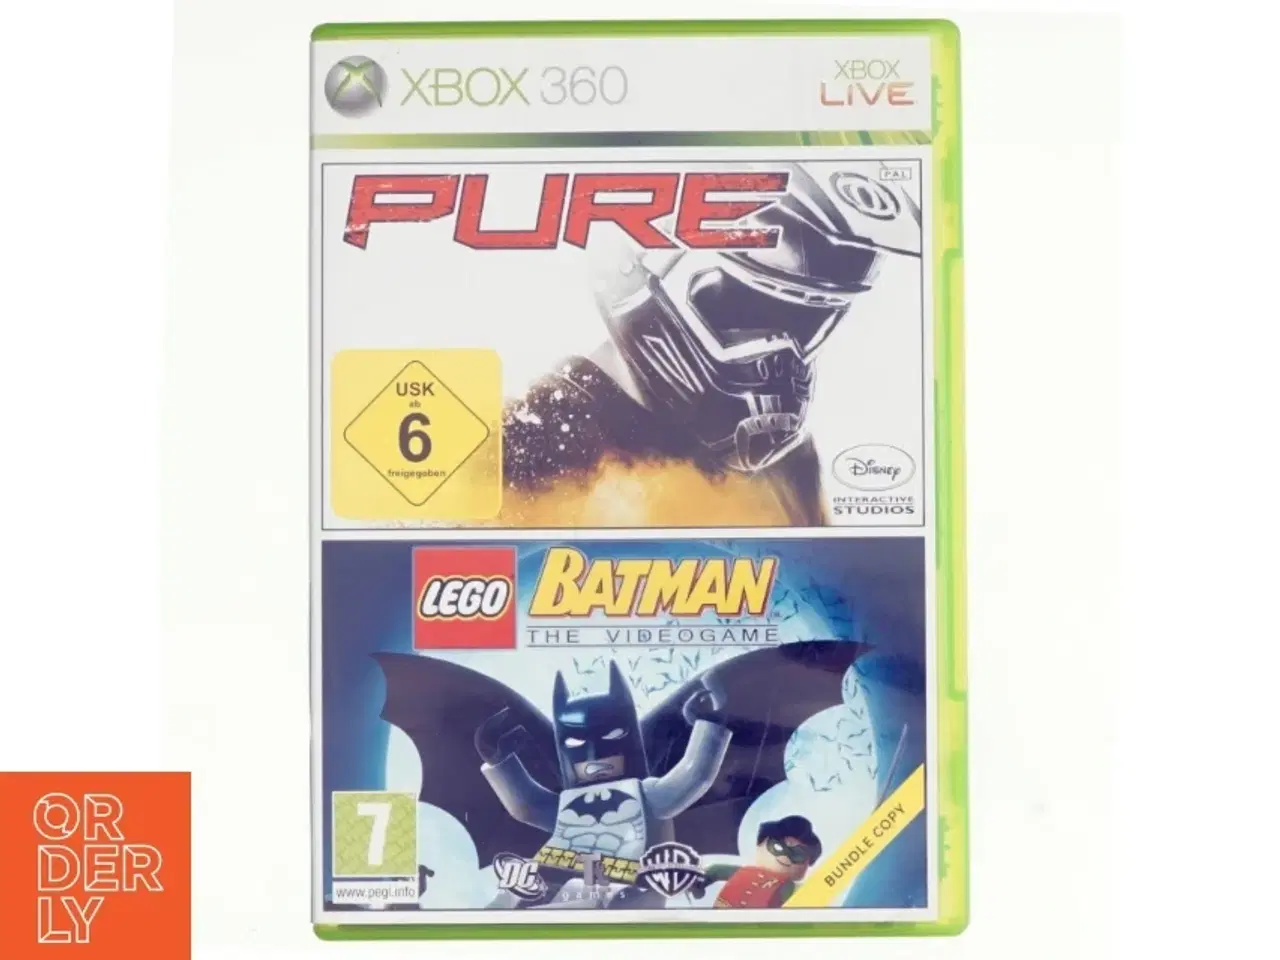 Billede 1 - Pure + Lego Batman fra X Box